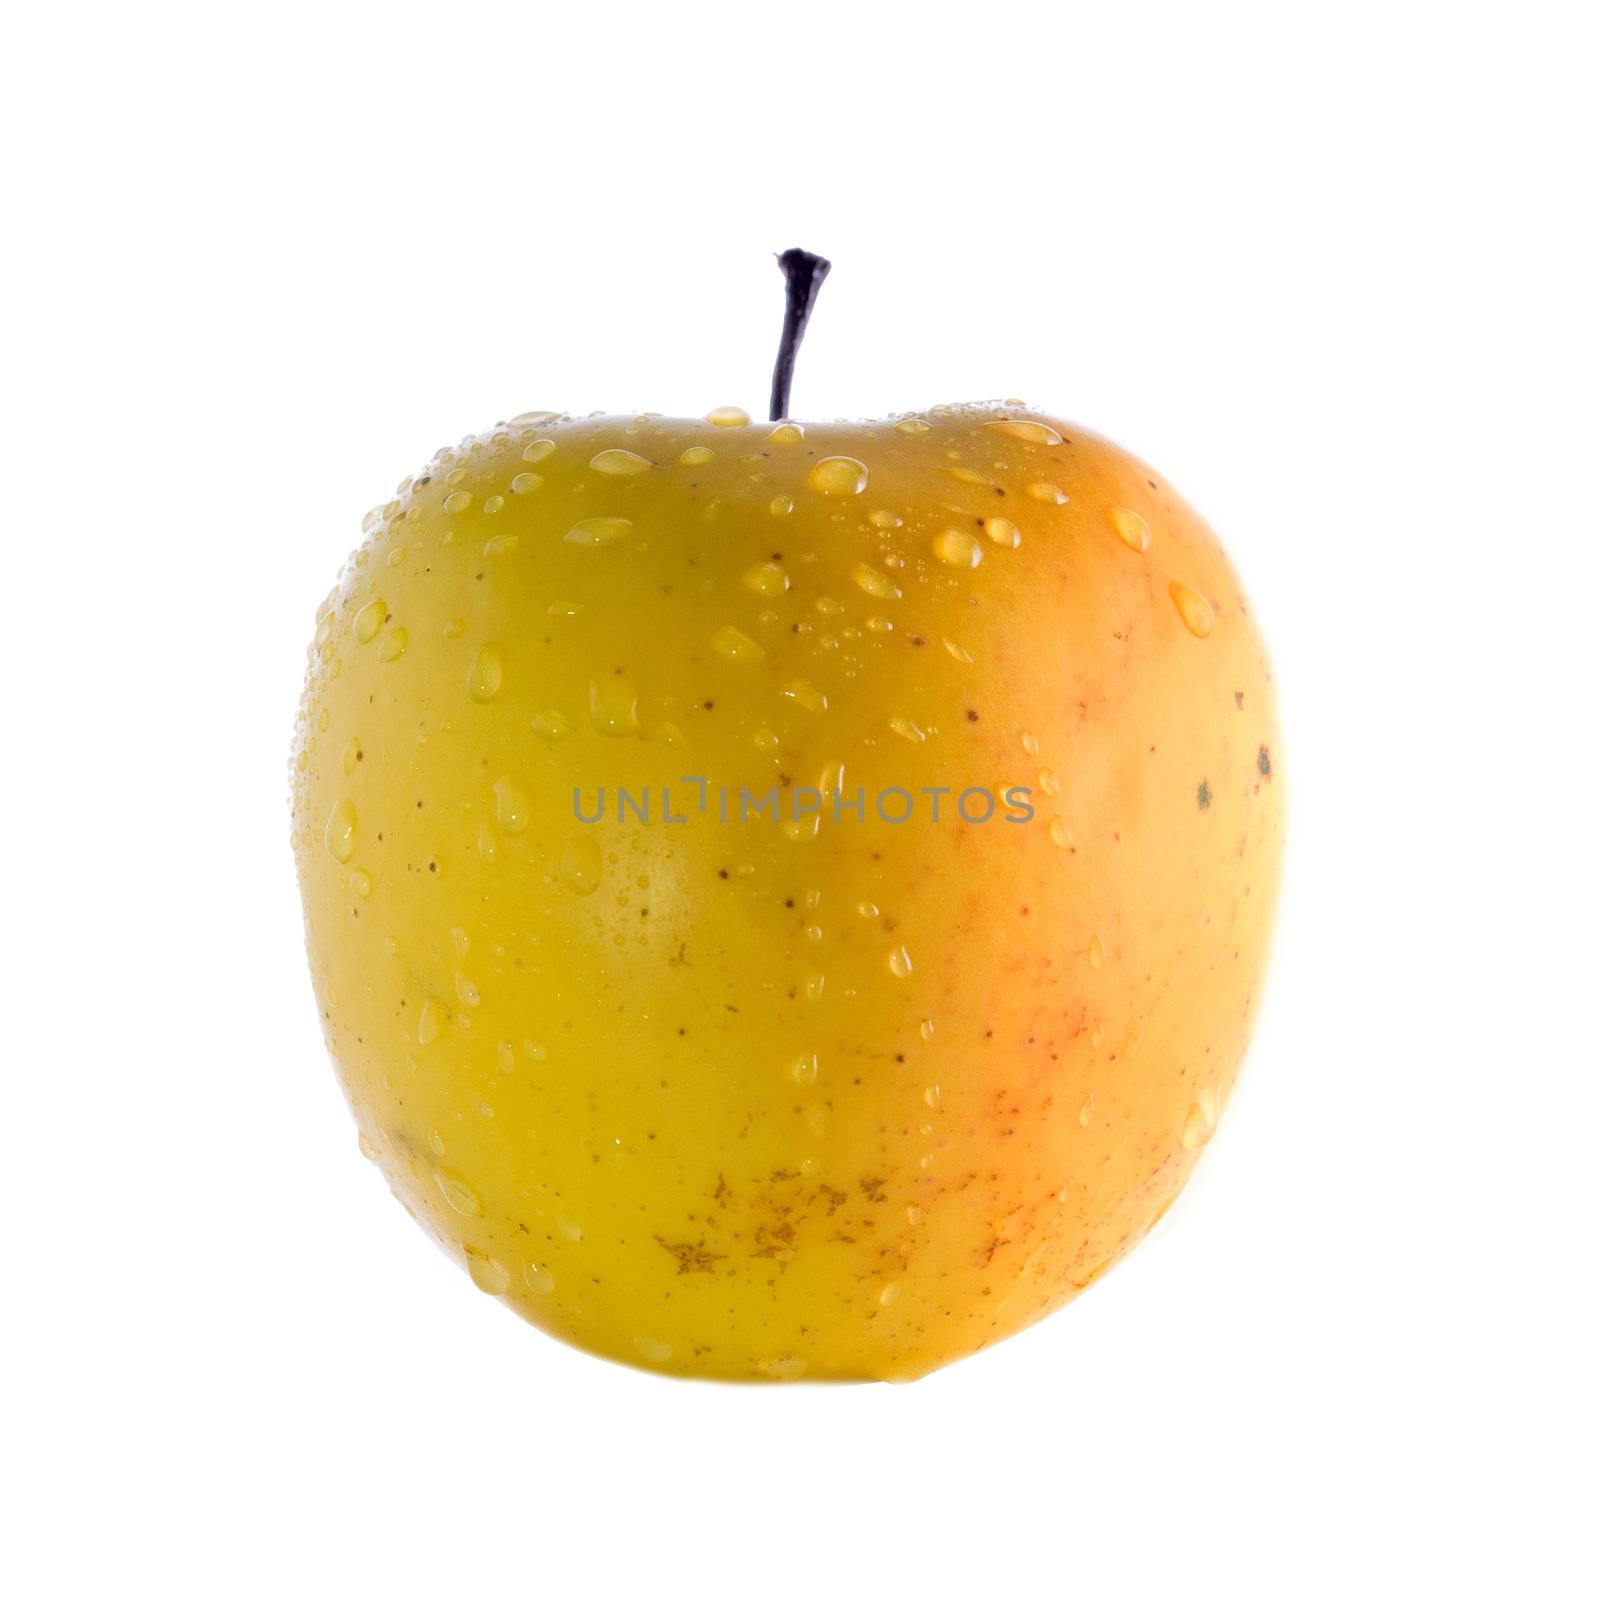 Big yellow apple by velkol